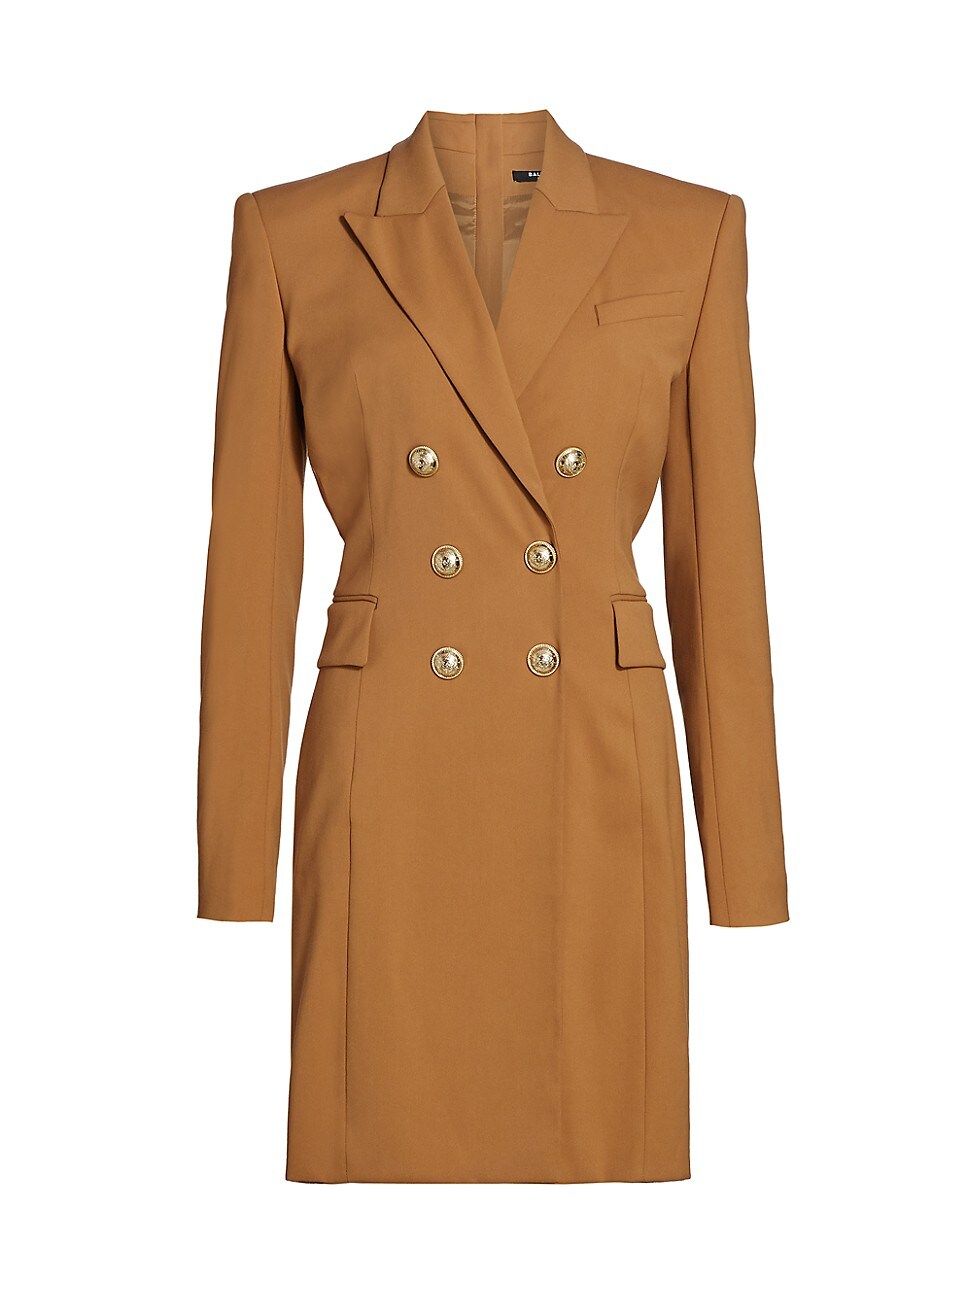 Balmain Women's Double Breasted Jacket Dress - Camel - Size 34 (2) | Saks Fifth Avenue